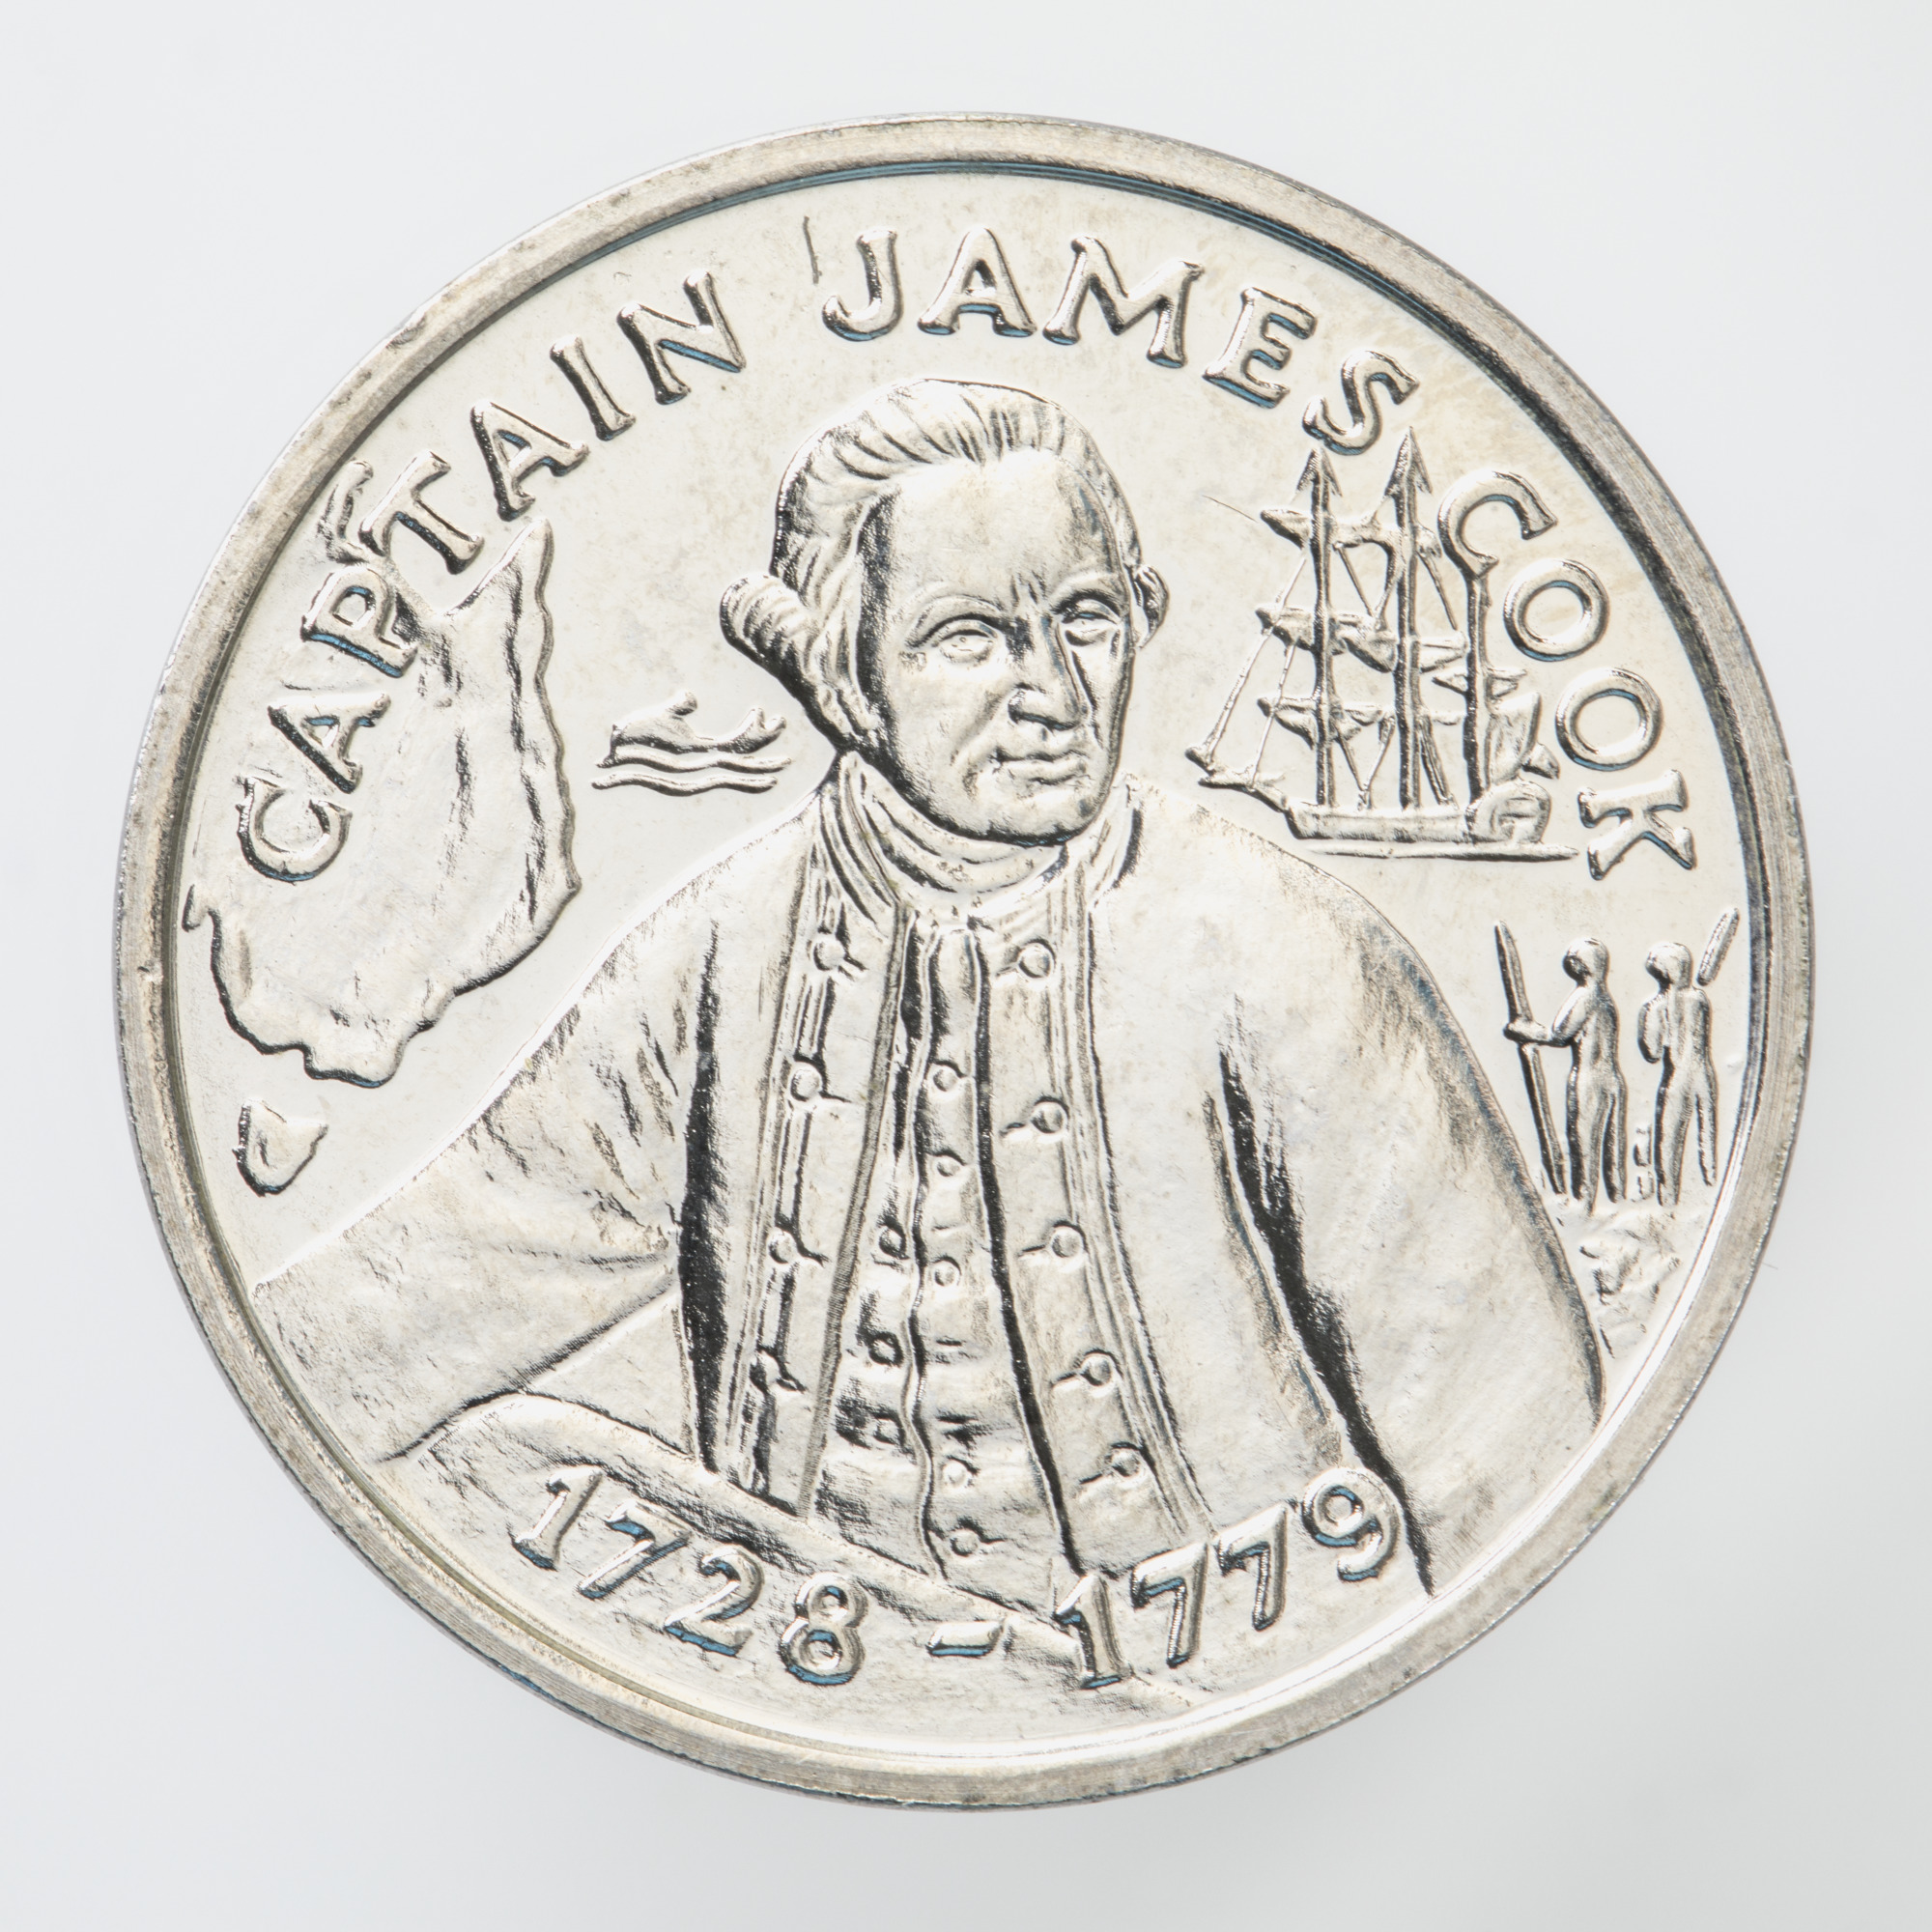 Australian bicentennial commemorative medal depicting Captain James Cook.